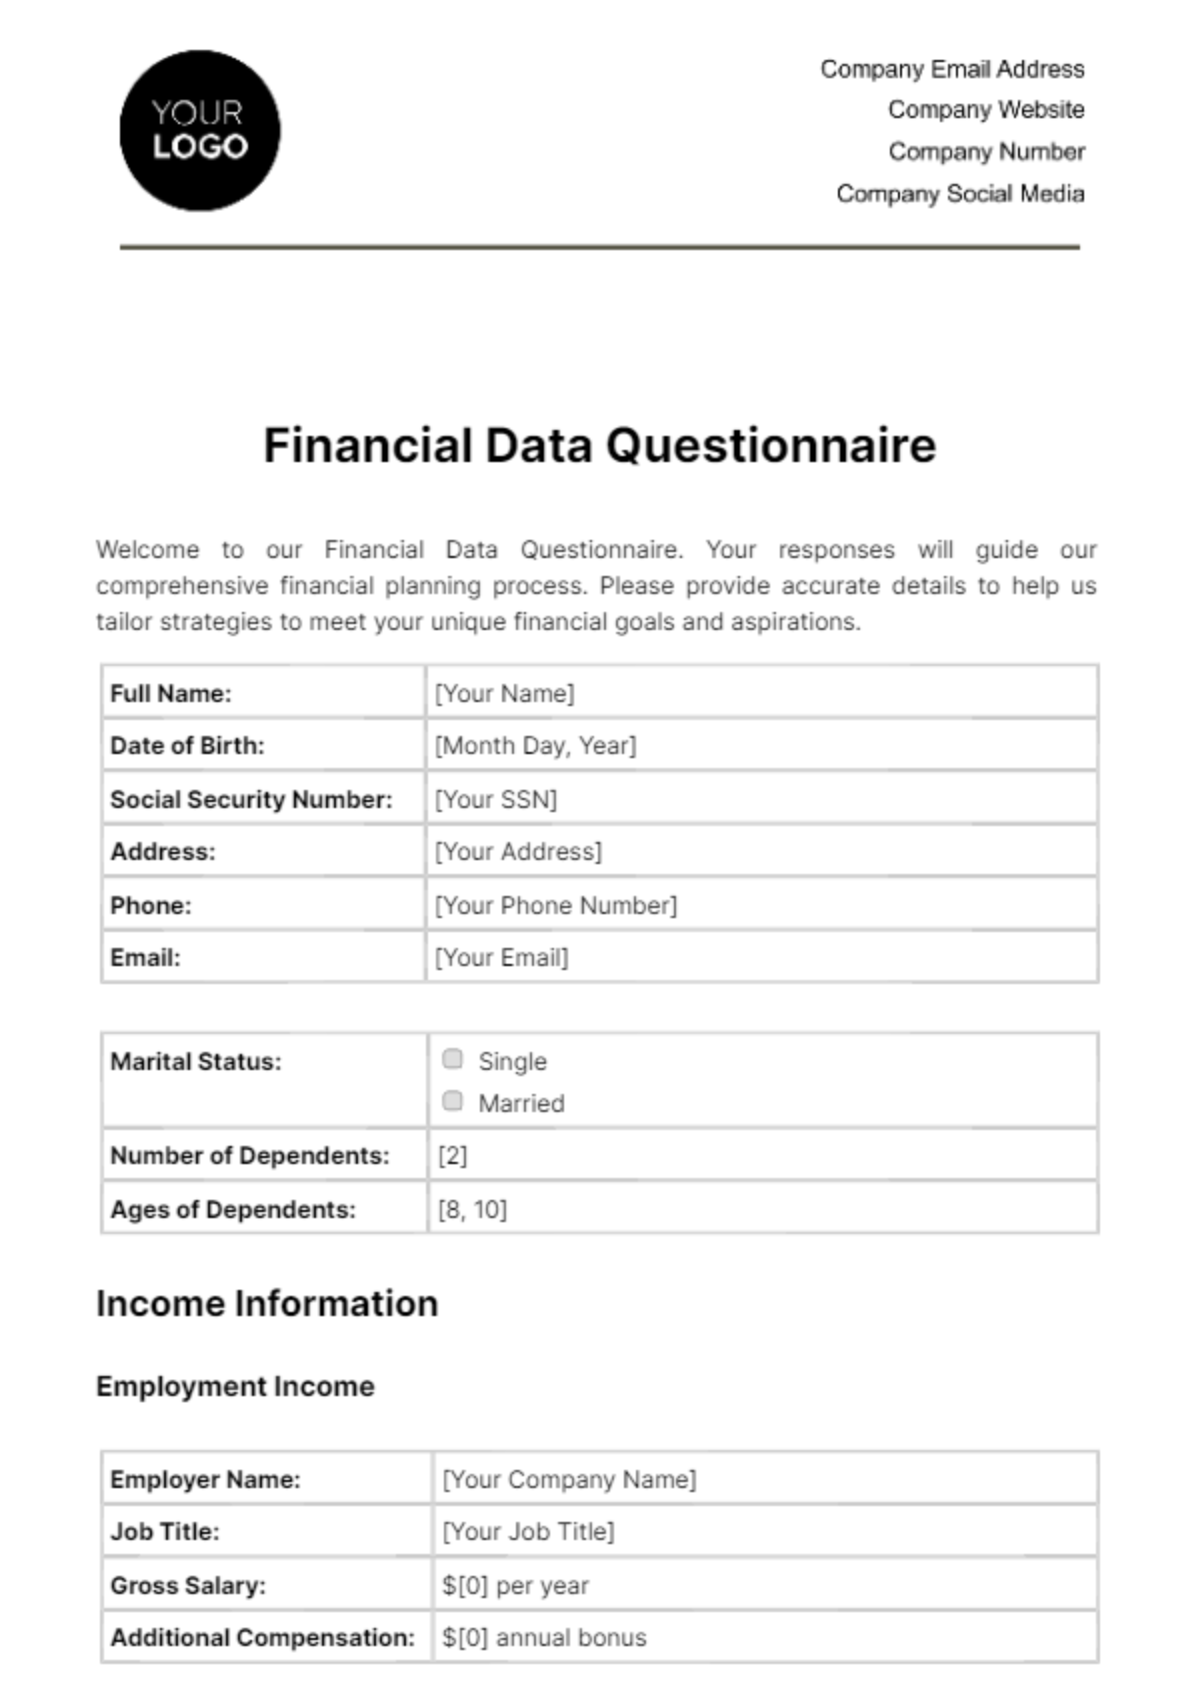 Financial Data Questionnaire Template